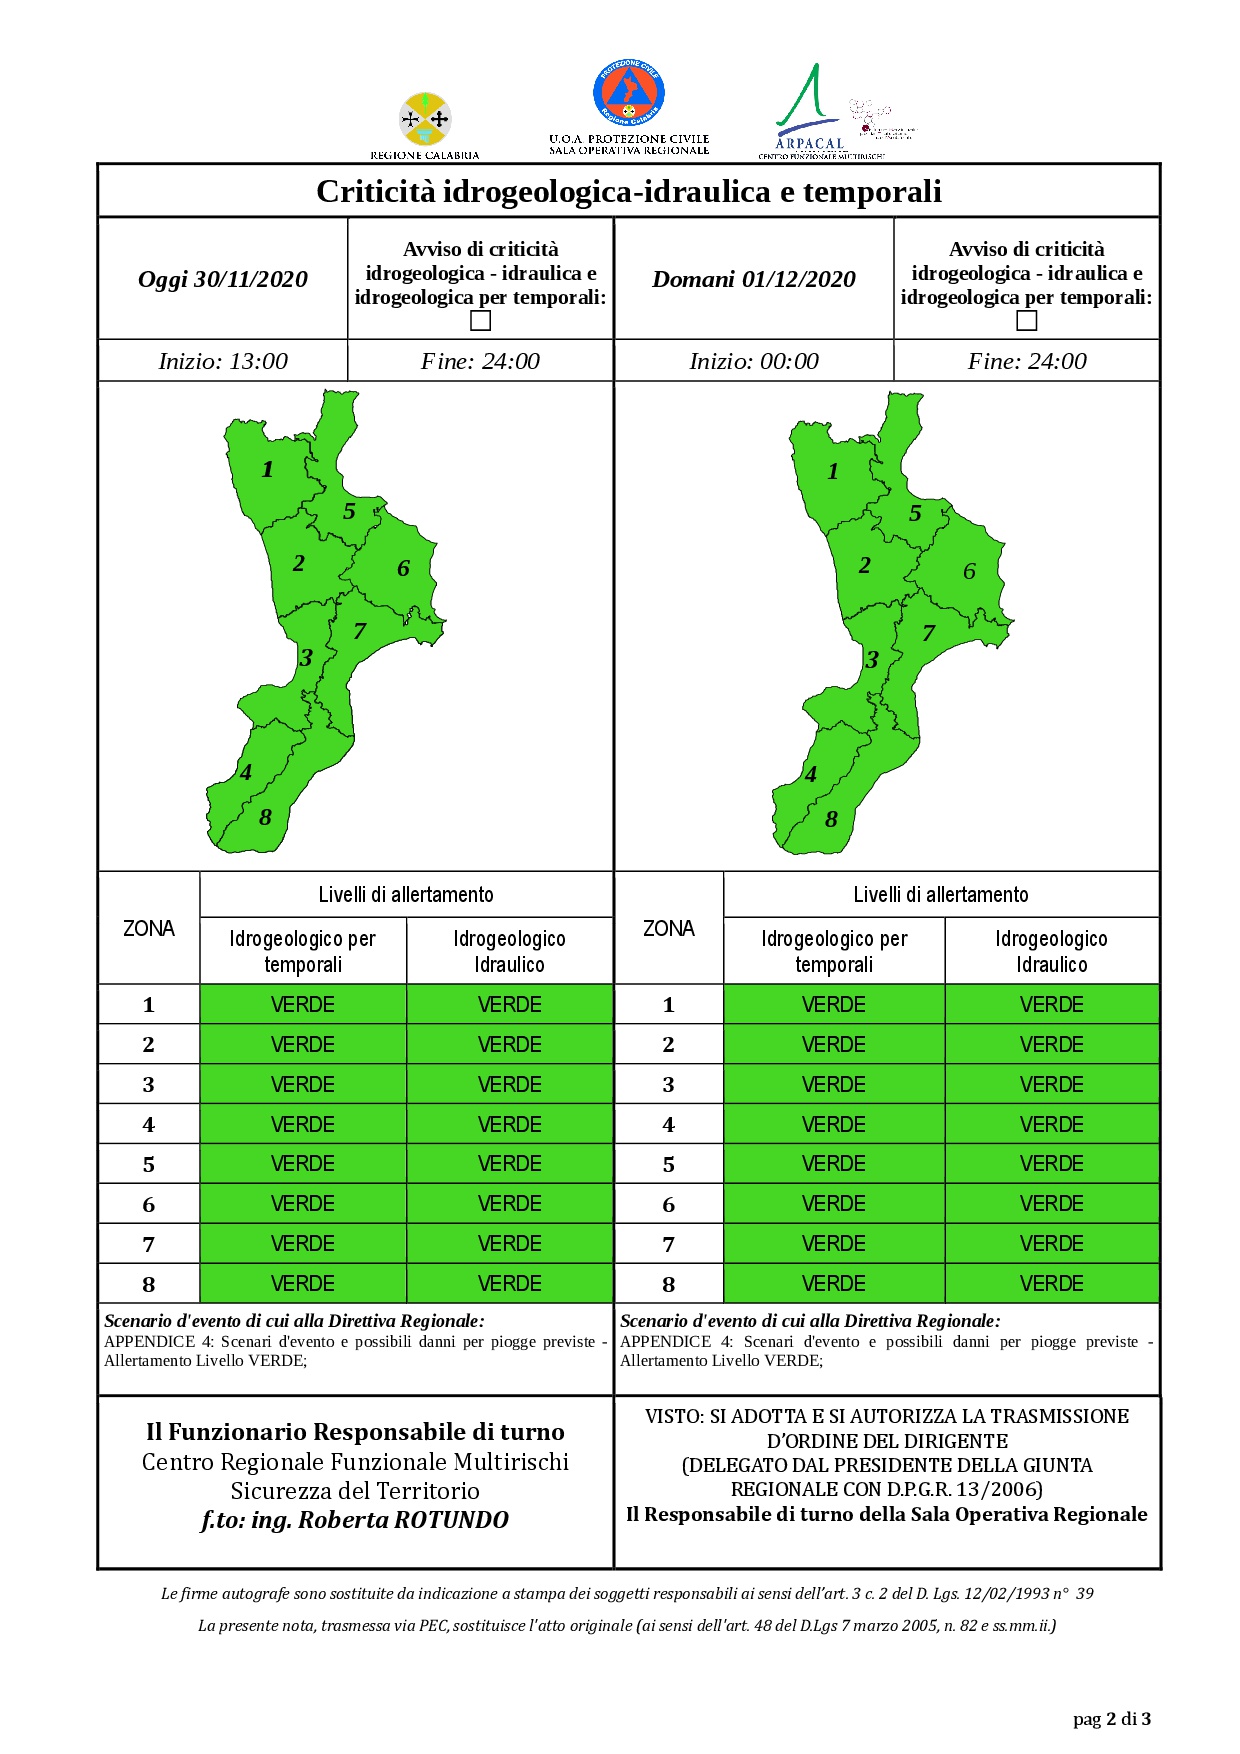 Criticità idrogeologica-idraulica e temporali in Calabria 30-11-2020